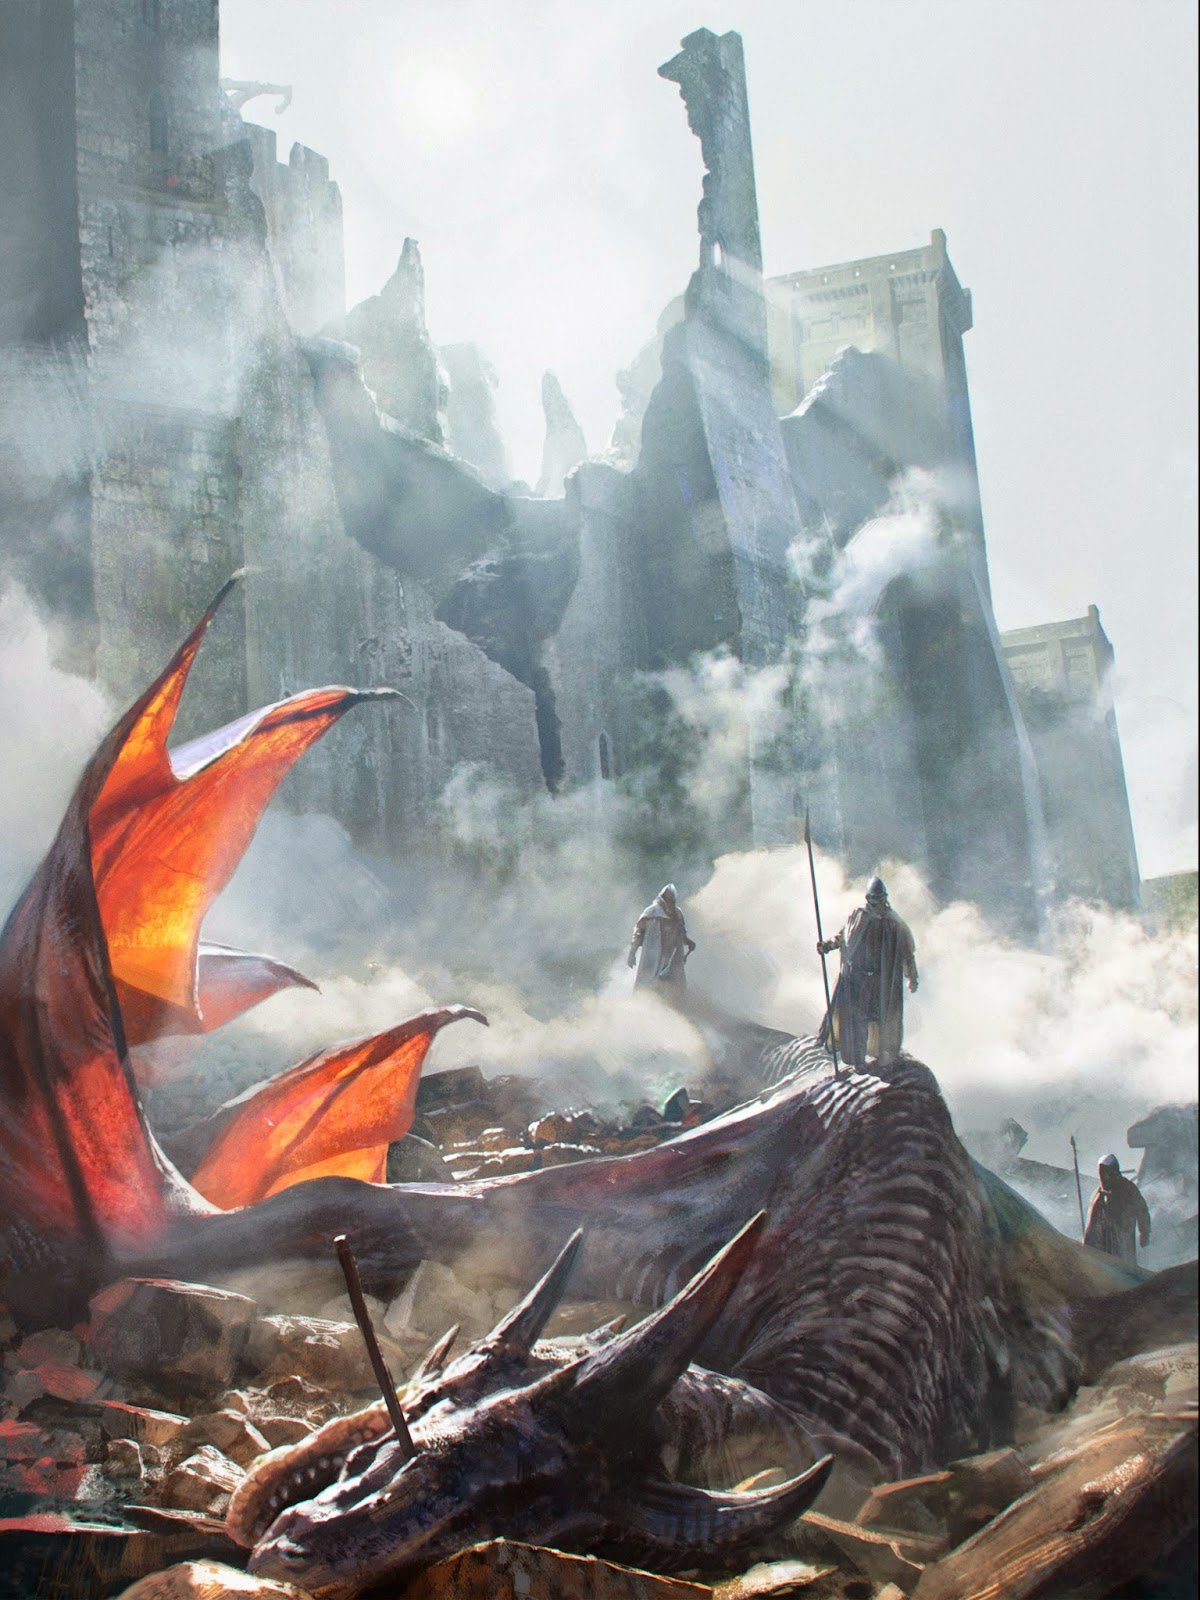 The Last Dragonslayer - Wikipedia